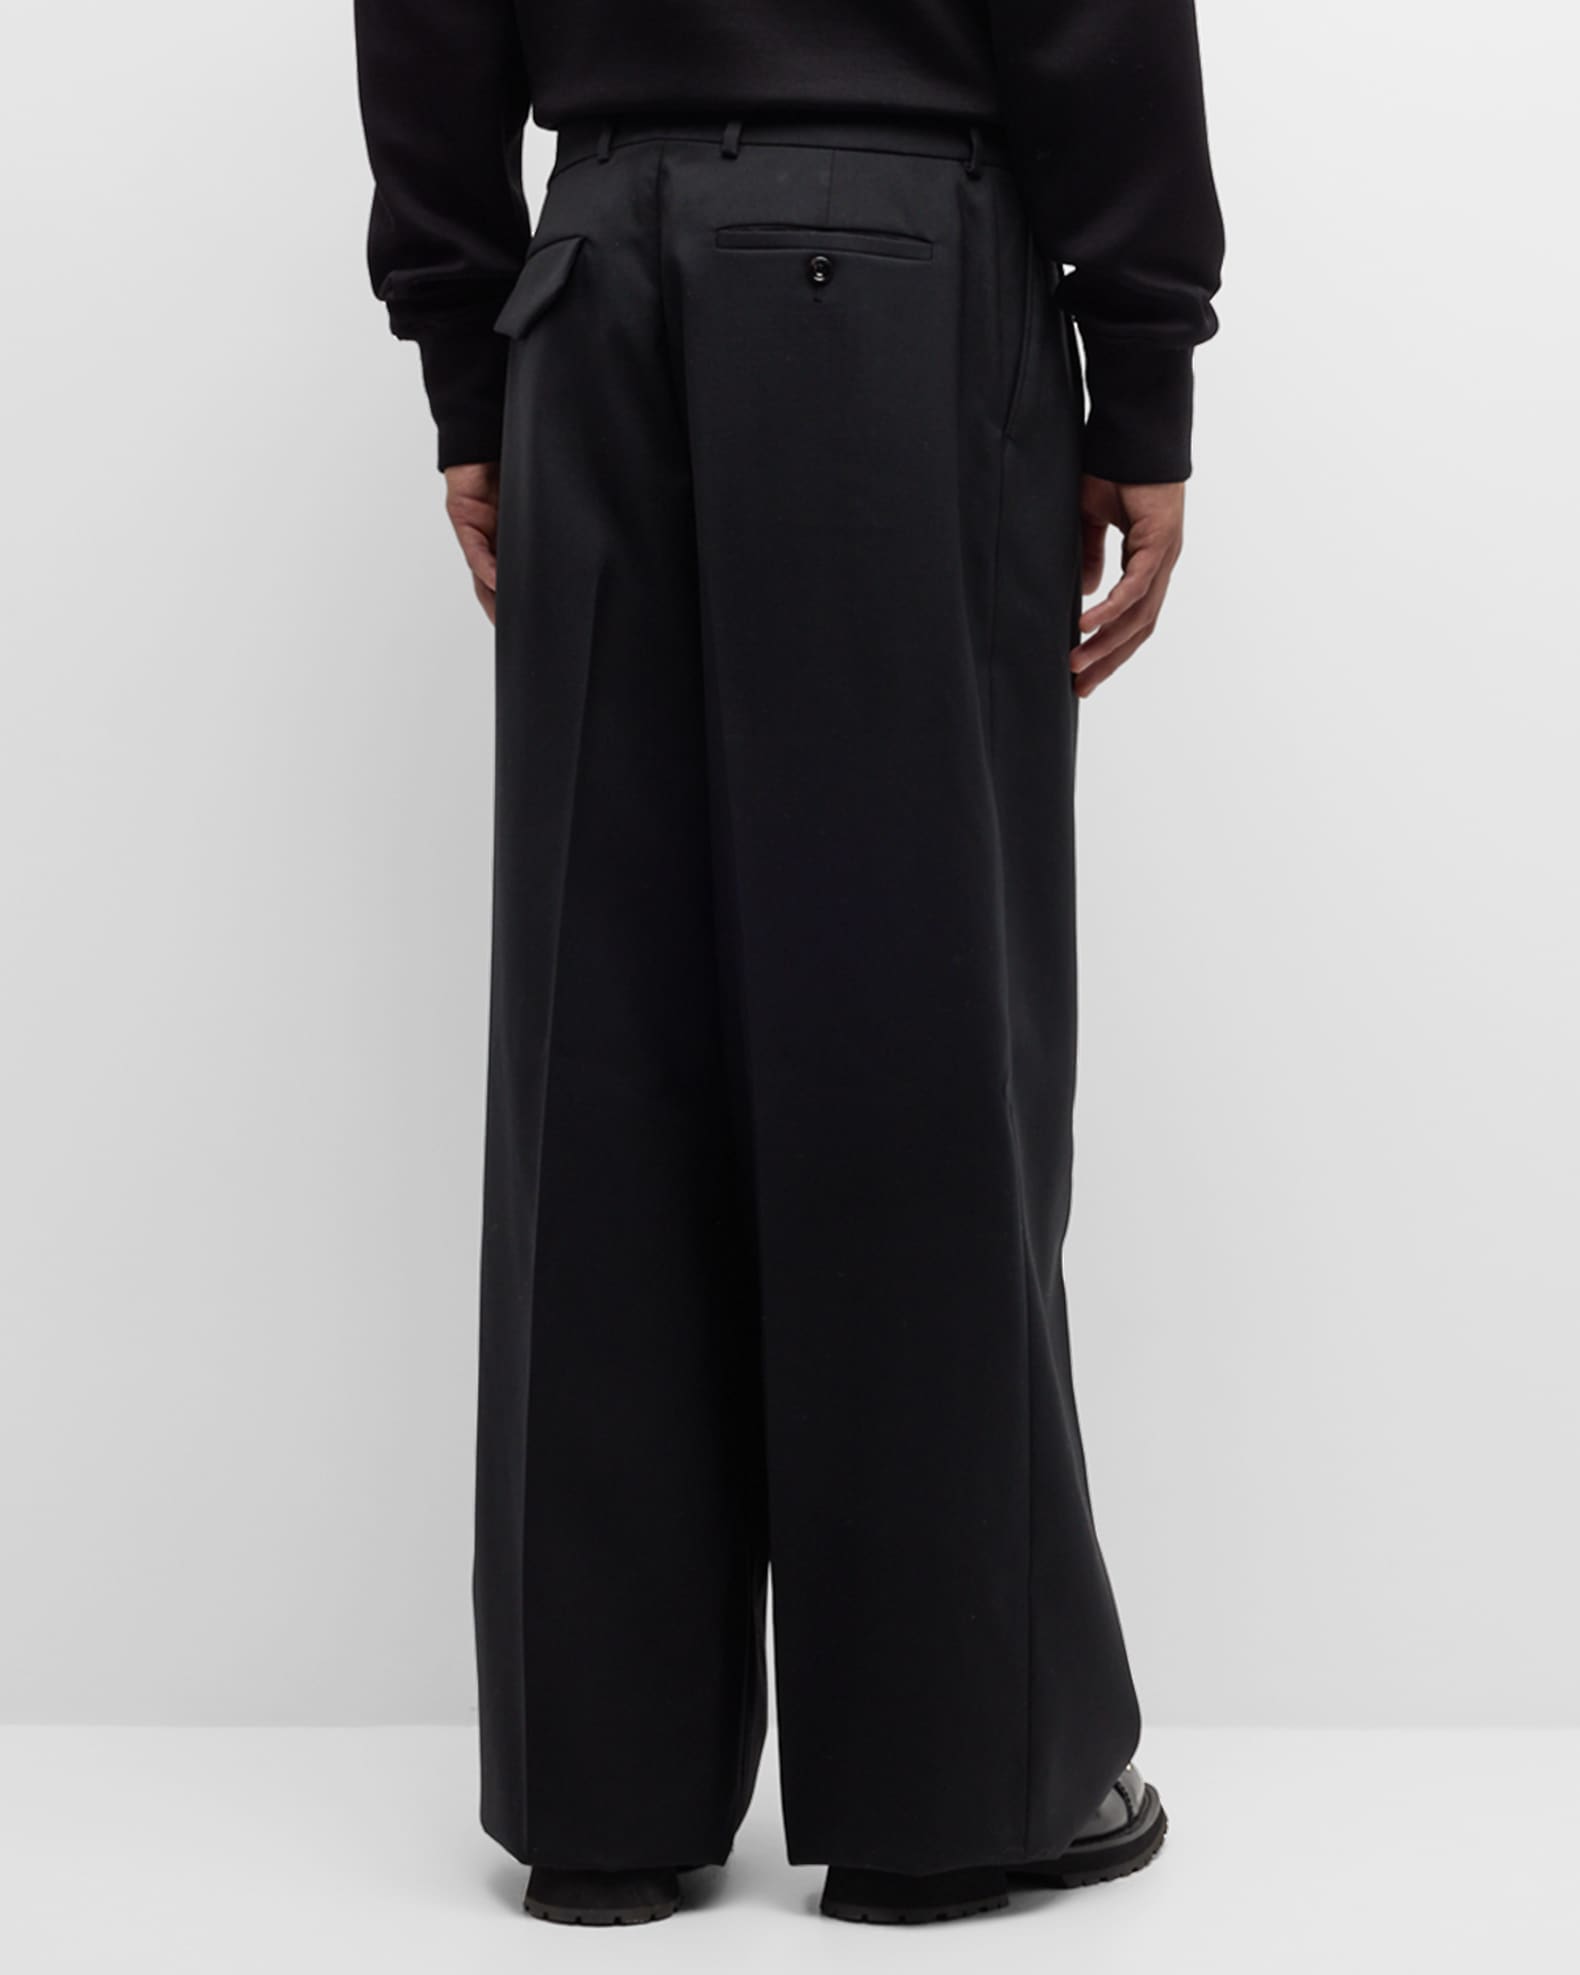 LOUIS VUITTON Dress Pants Black Wool Mens Trousers Size 50 IT